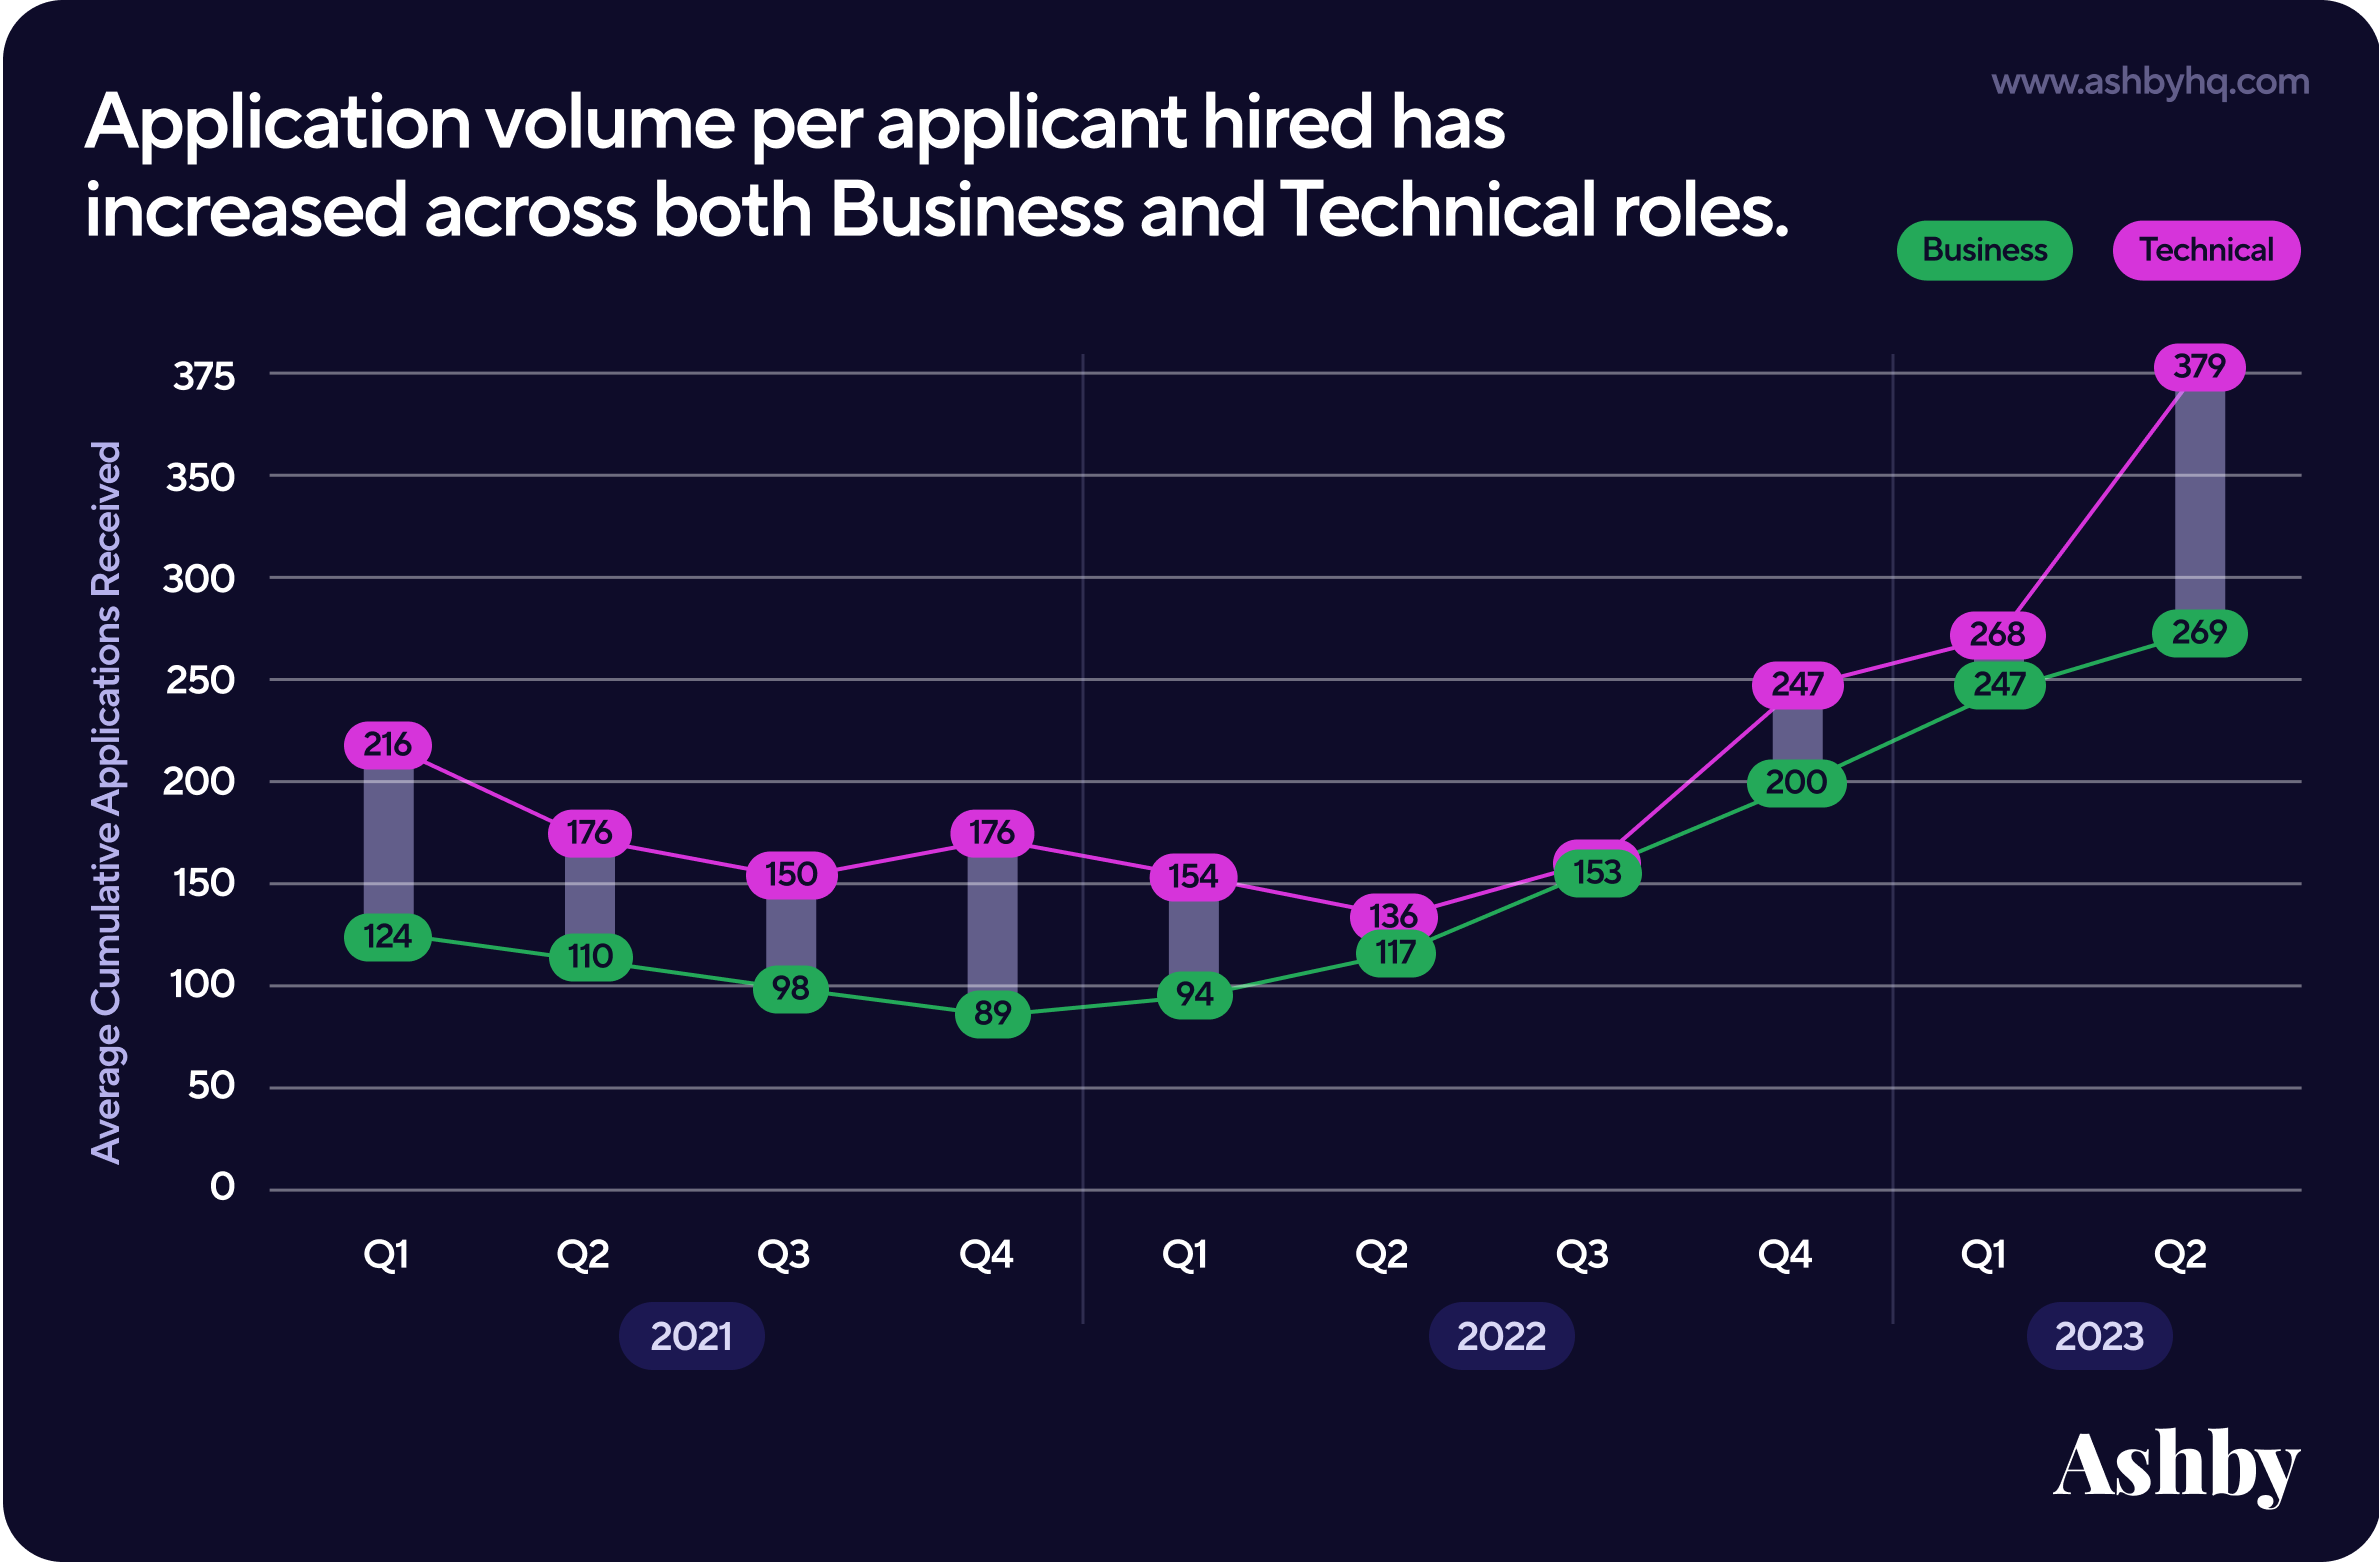 app volume per hire increased across roles